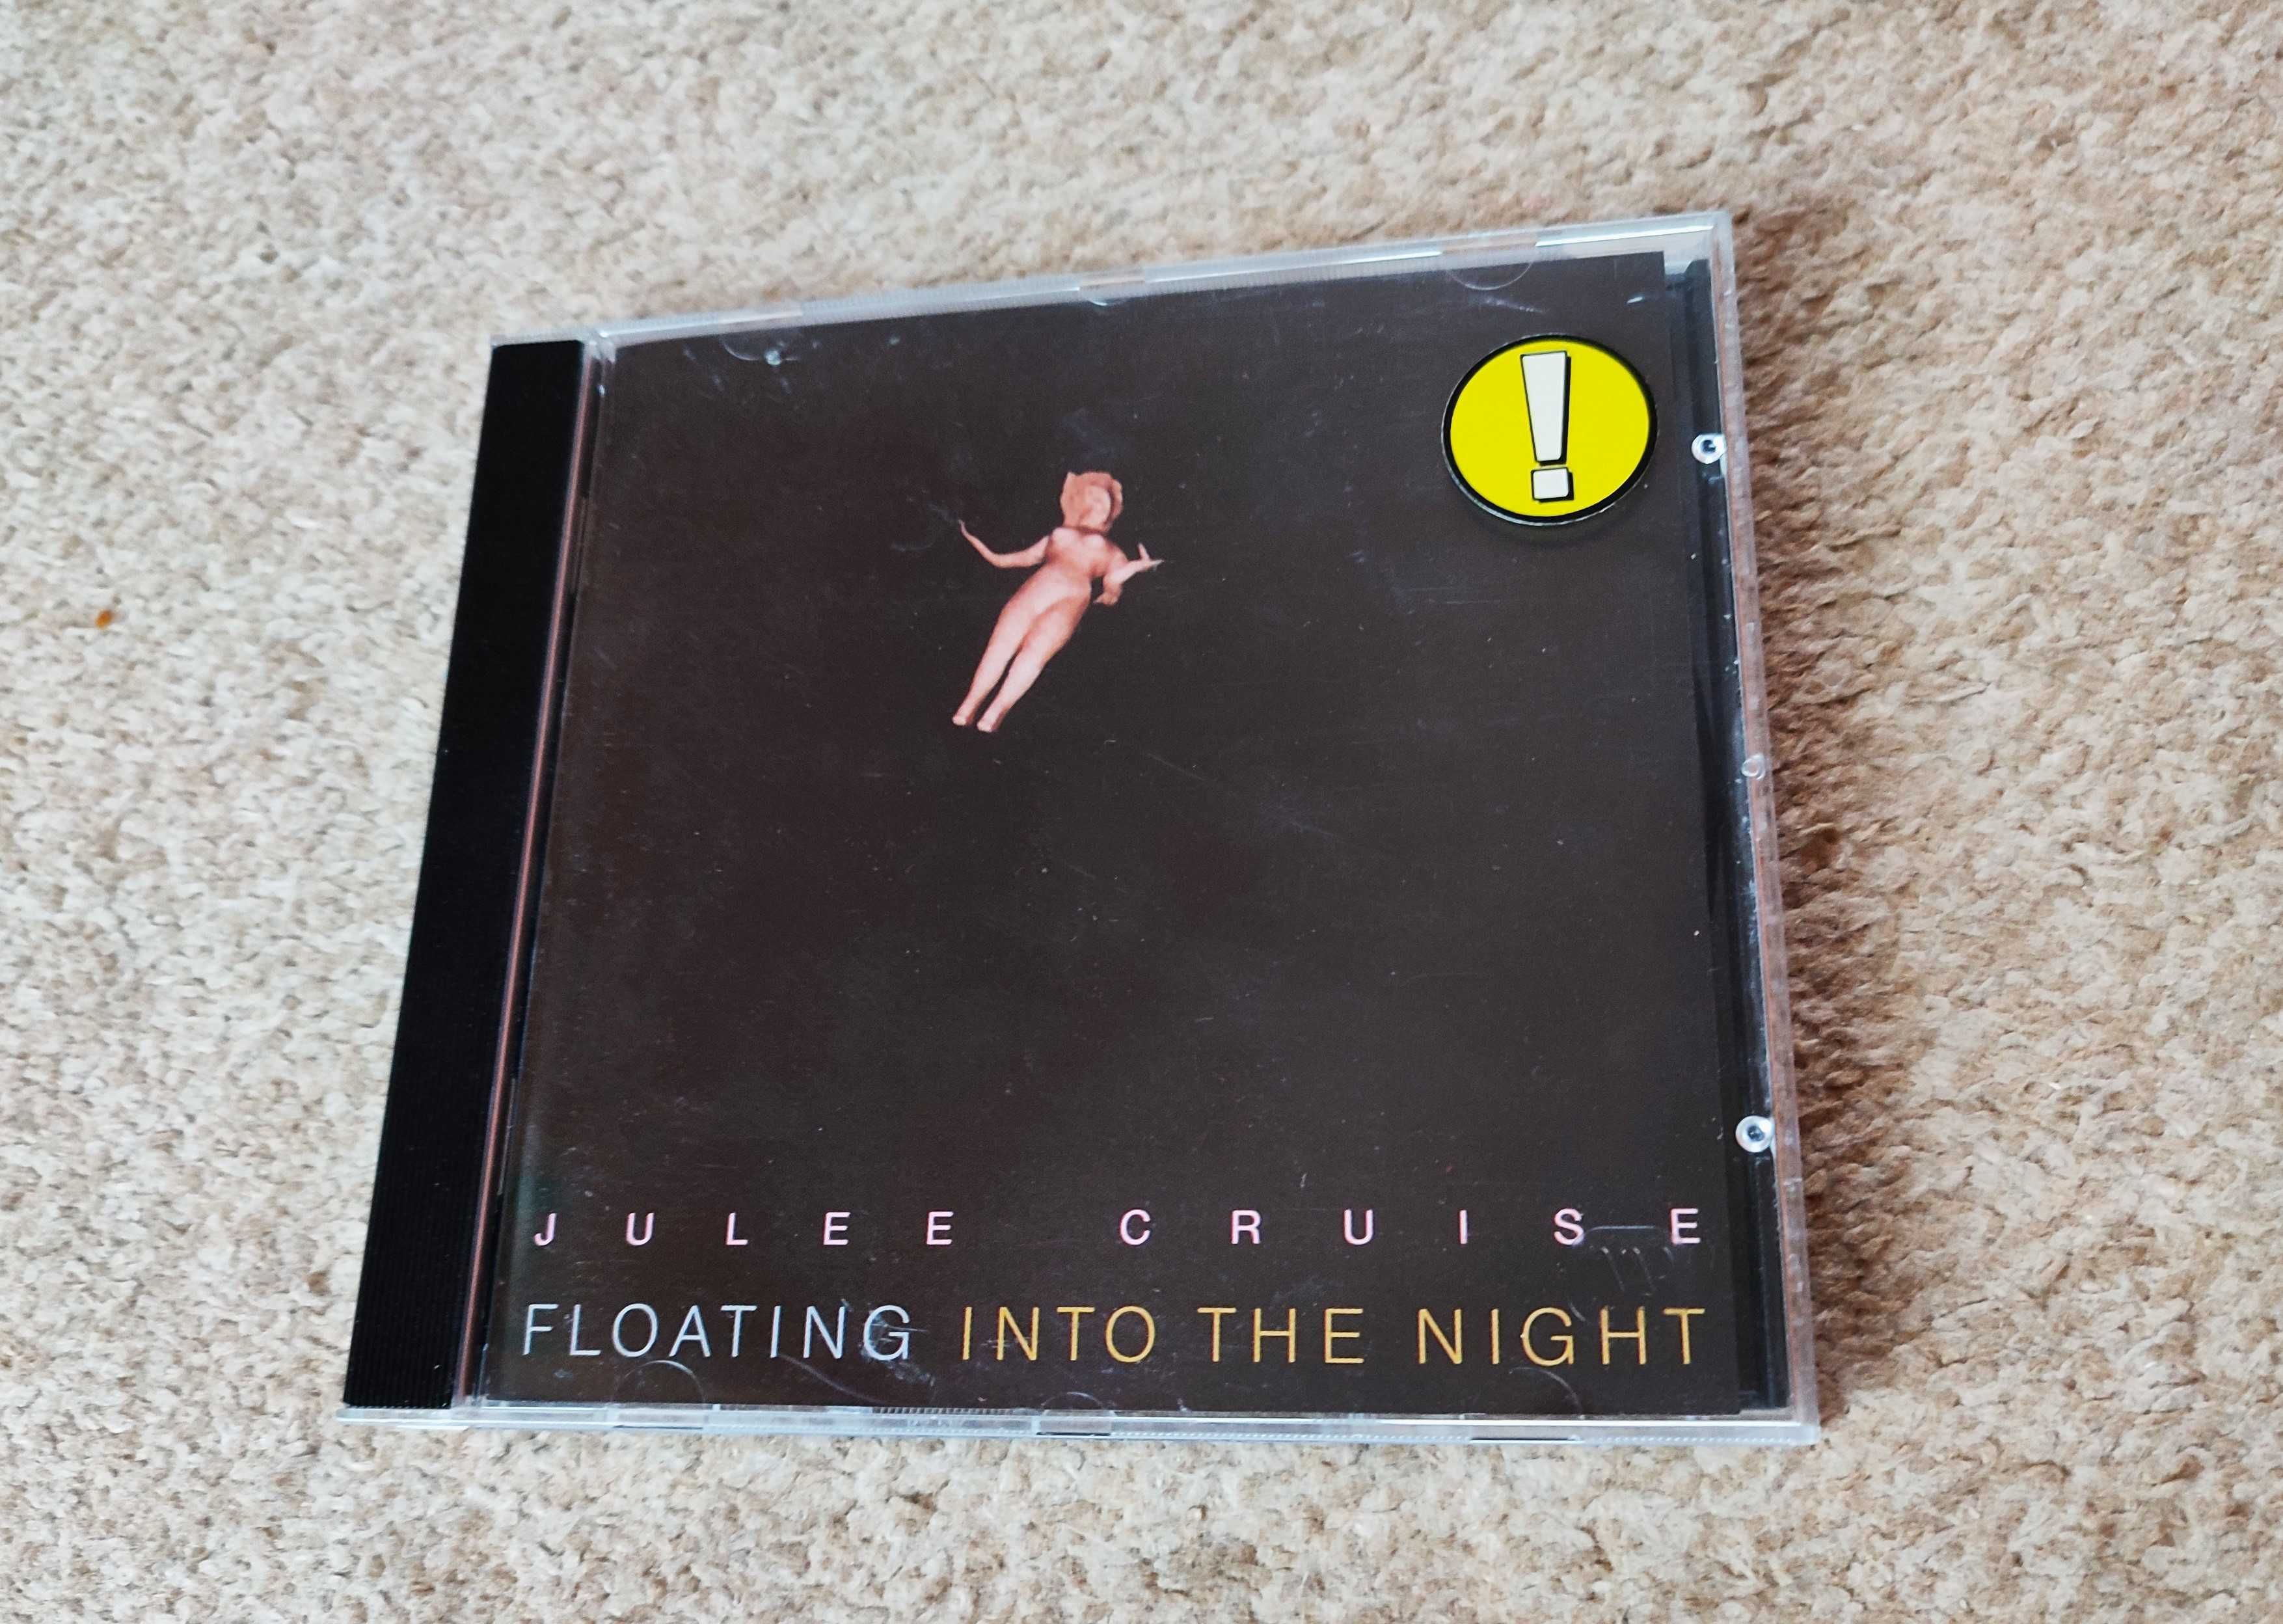 Julee Cruise "Floating Into The Night" płyta CD stan idealny, jak nowa